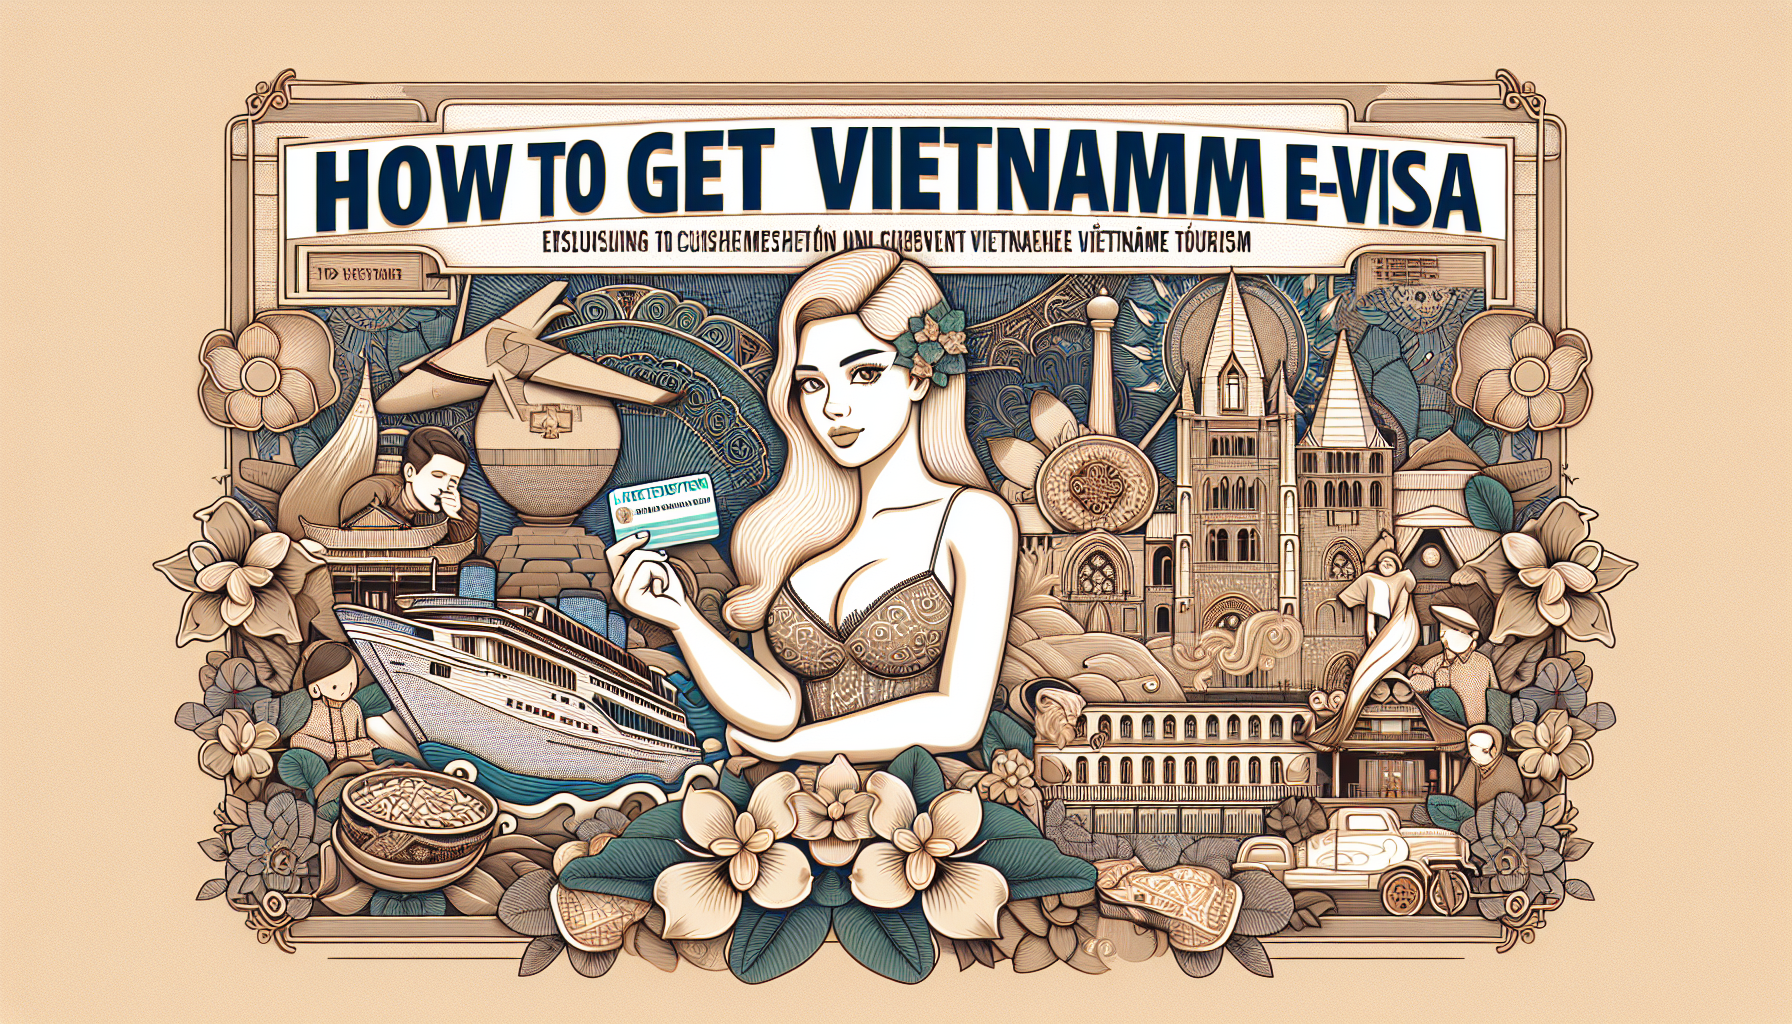 Vietnam Evisa for Citizens from Liechtenstein